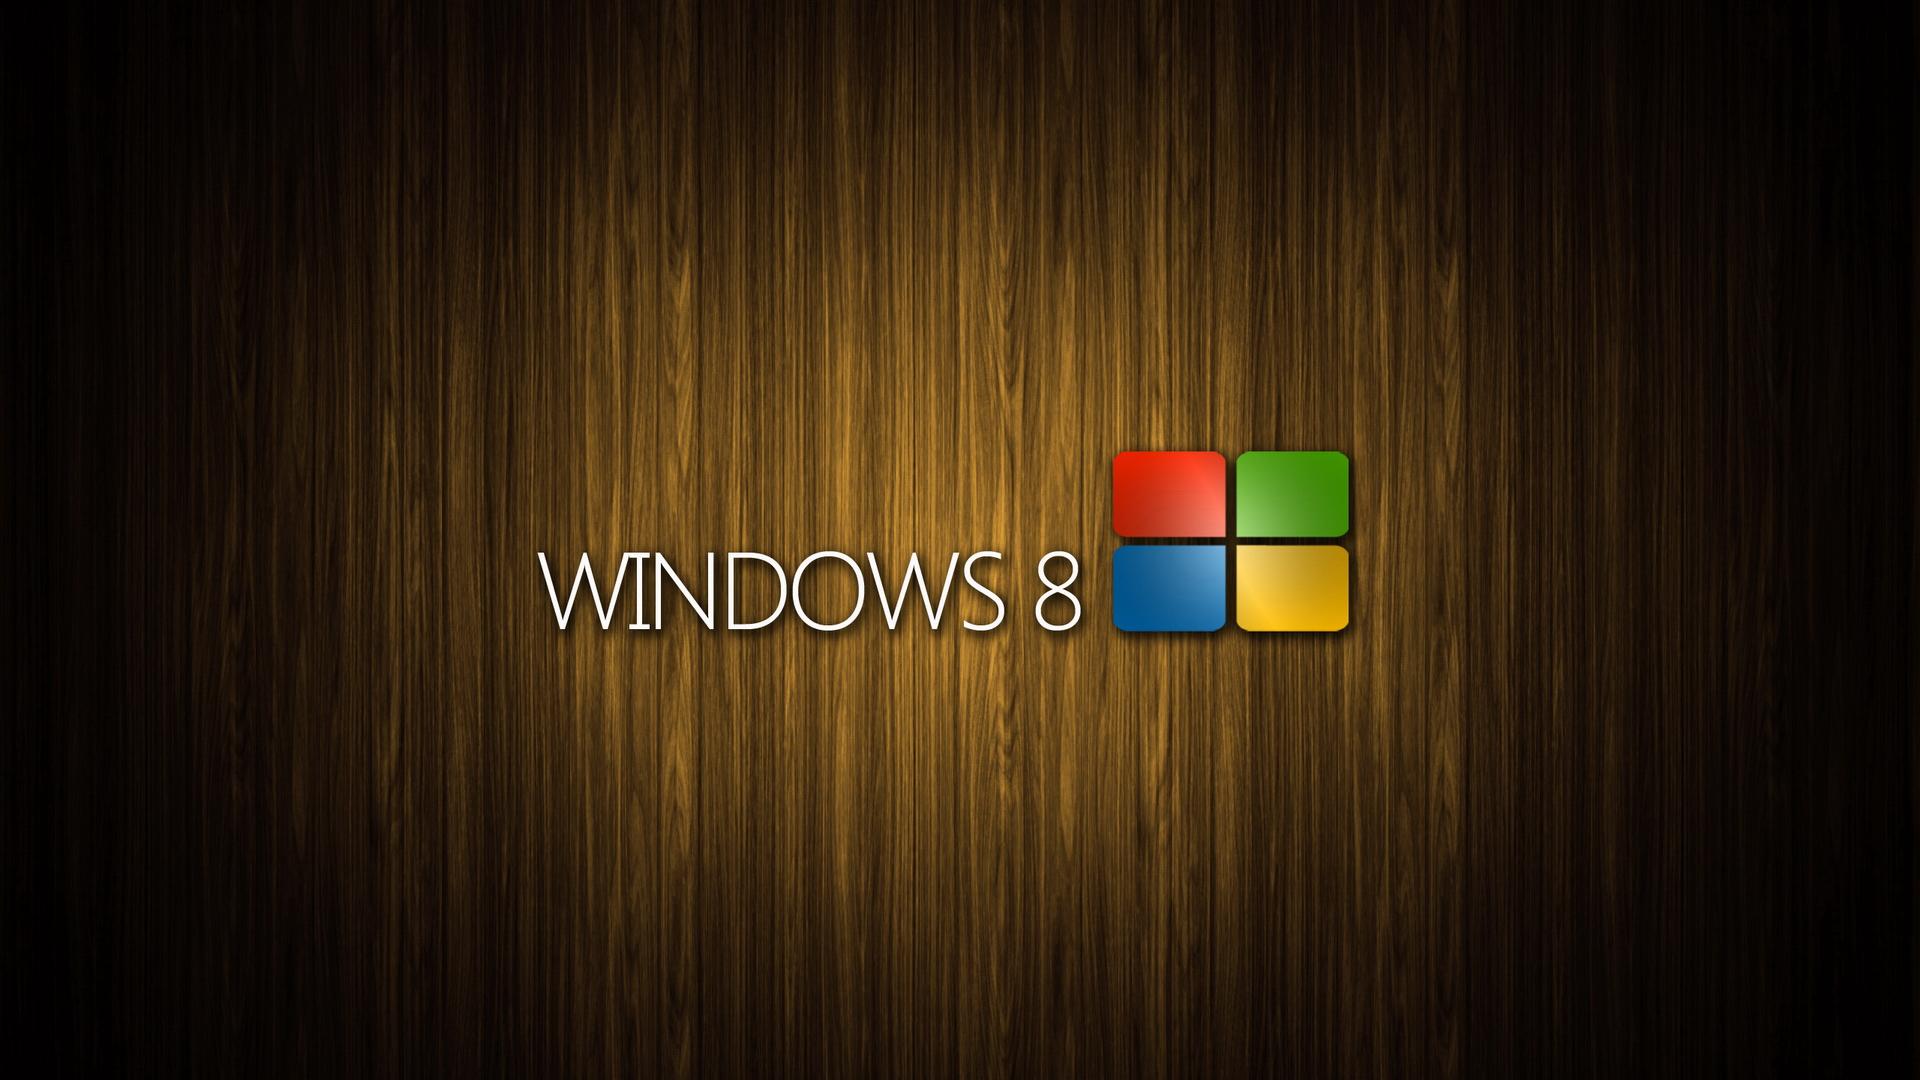 windows 8 wallpaper hd 1080p free download #20